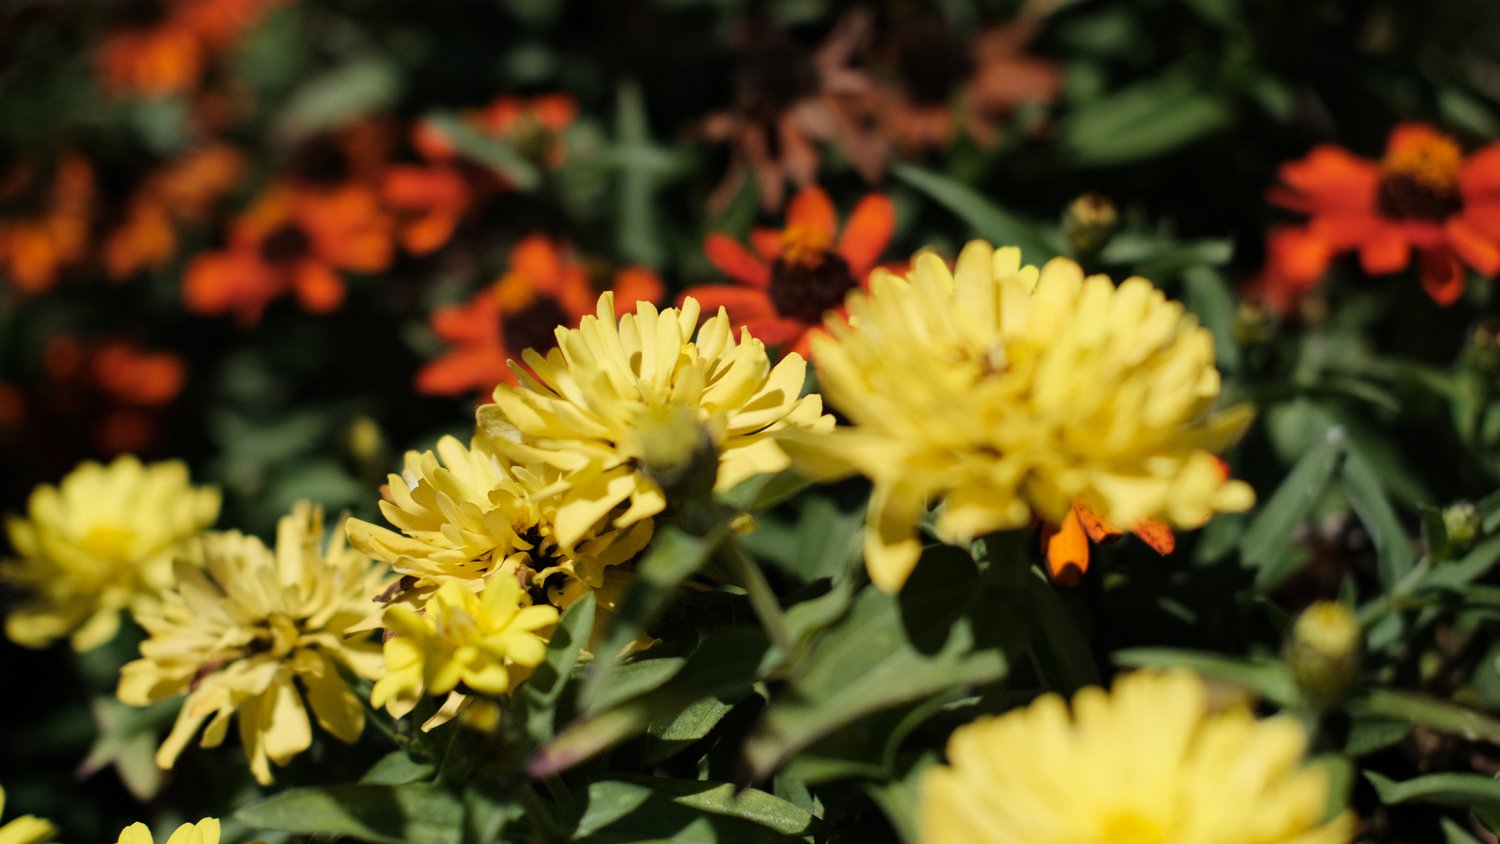 Yellow and orange flowers.